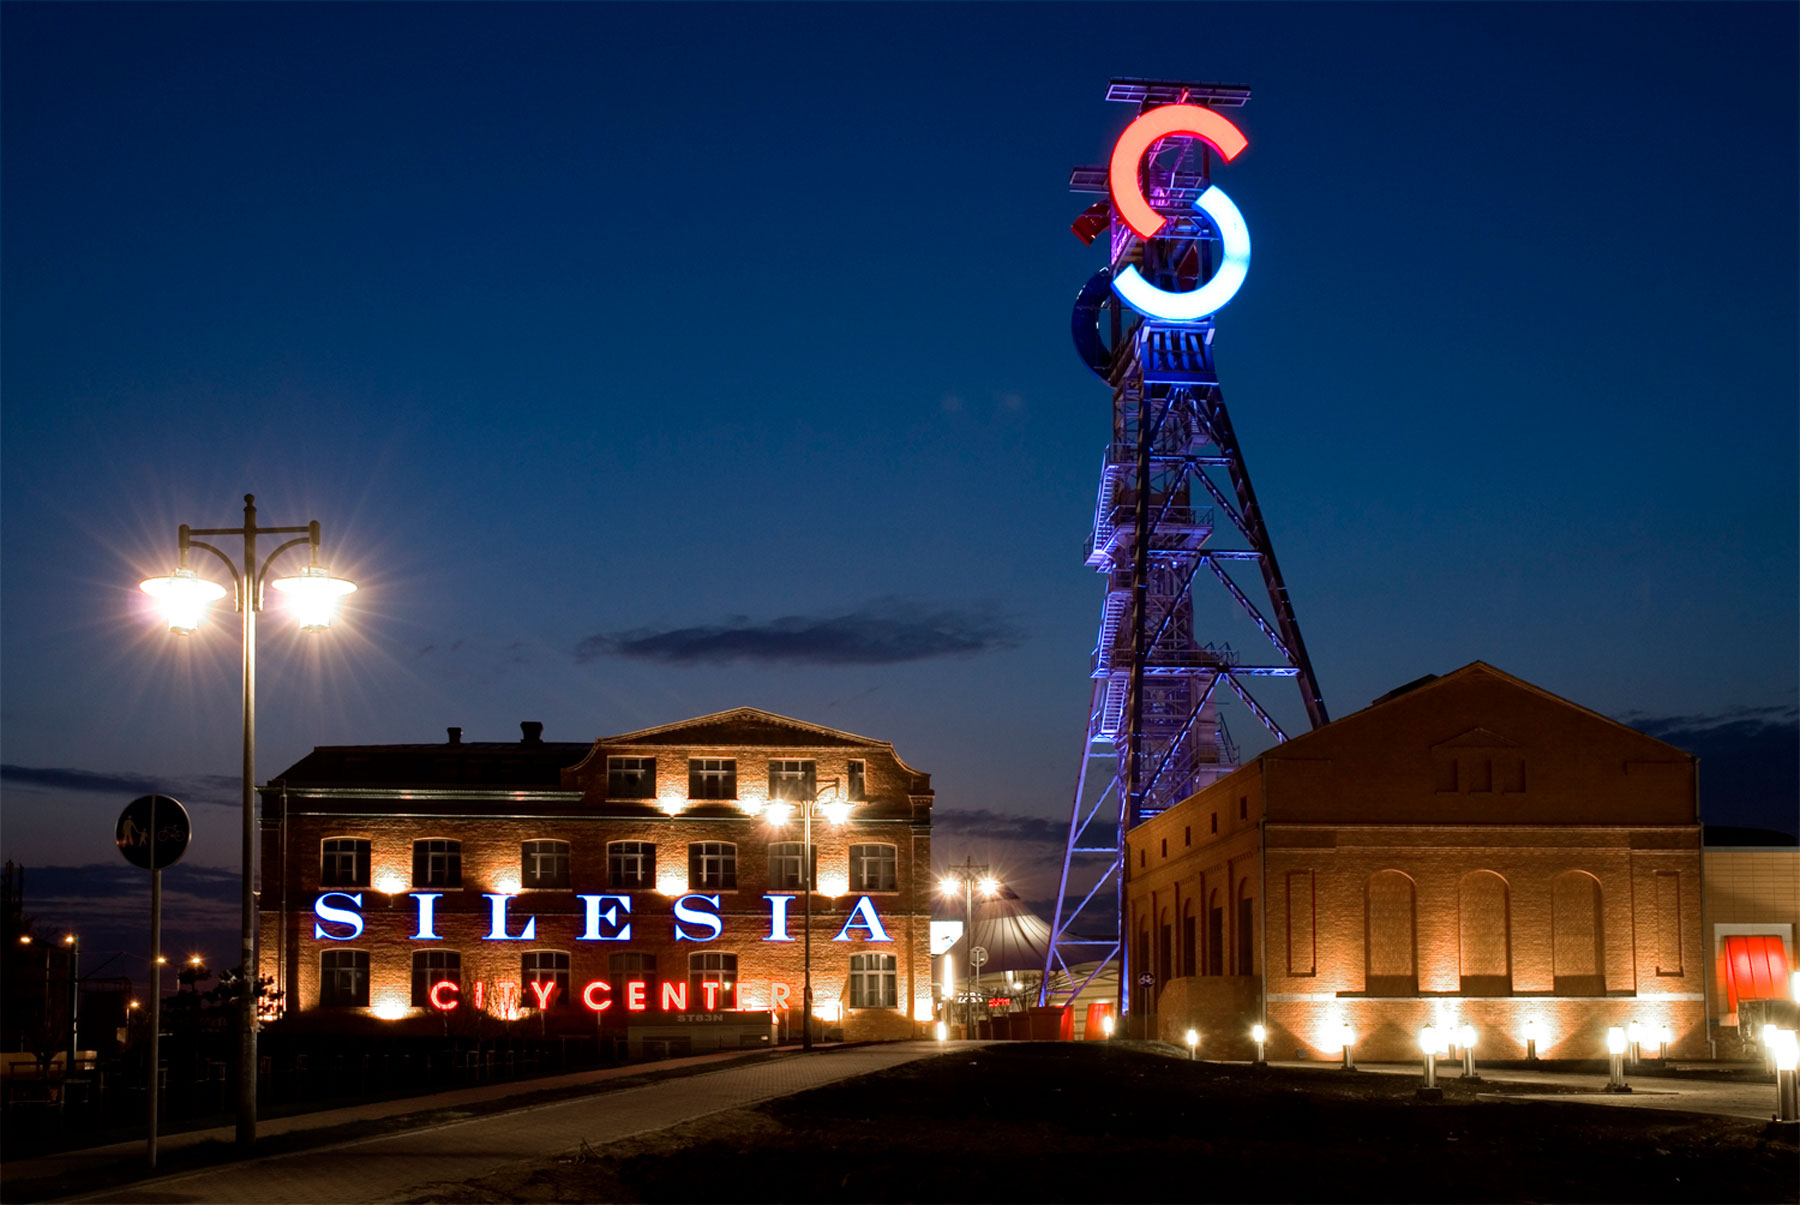 Silesia City Center - industrialnego śląska